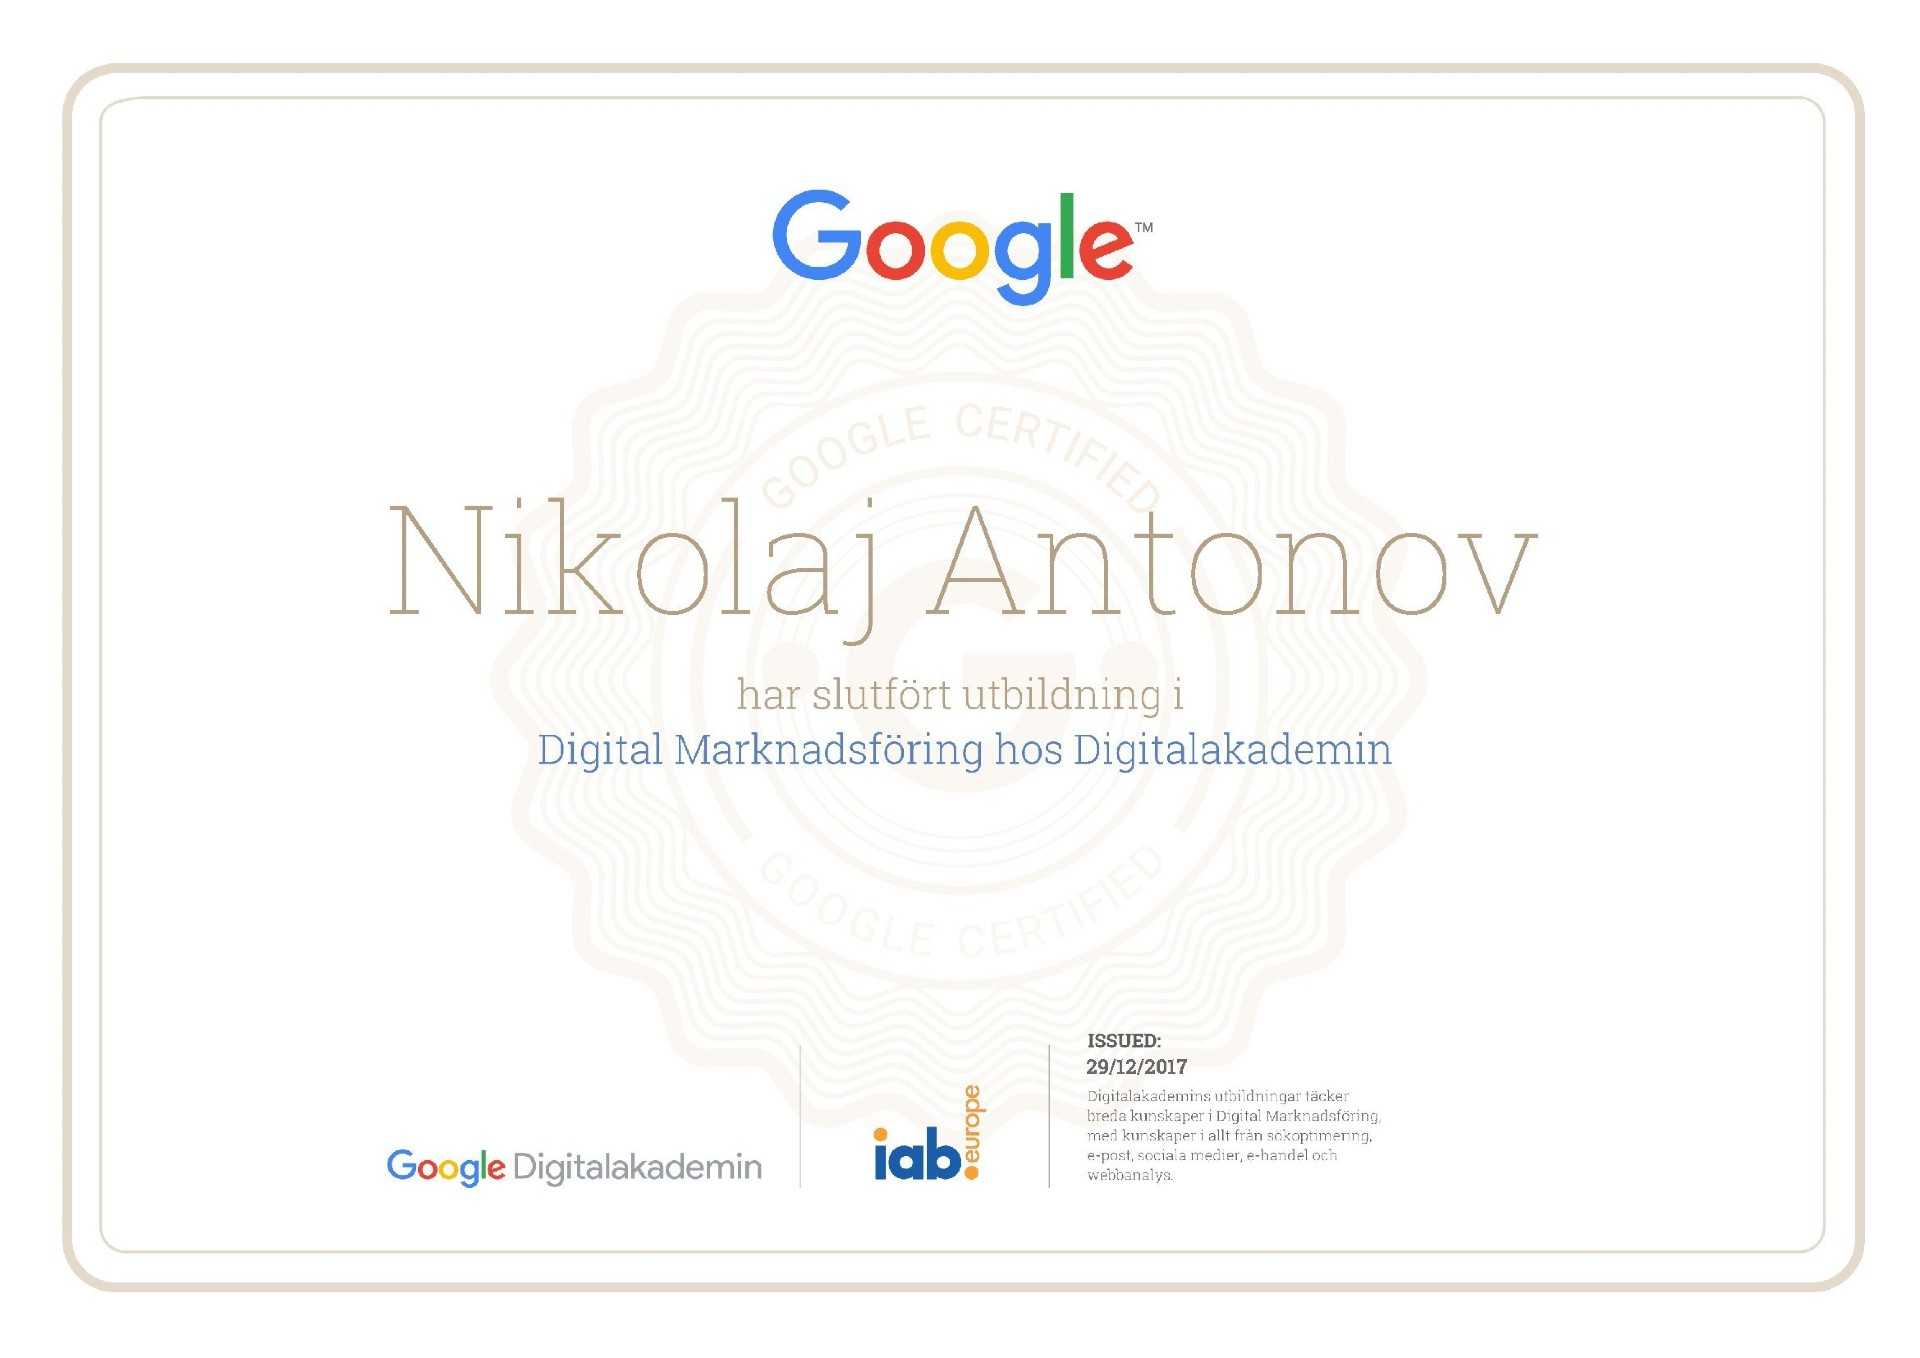 Intyget Google Digitalakademin av Nikolaj Antonov